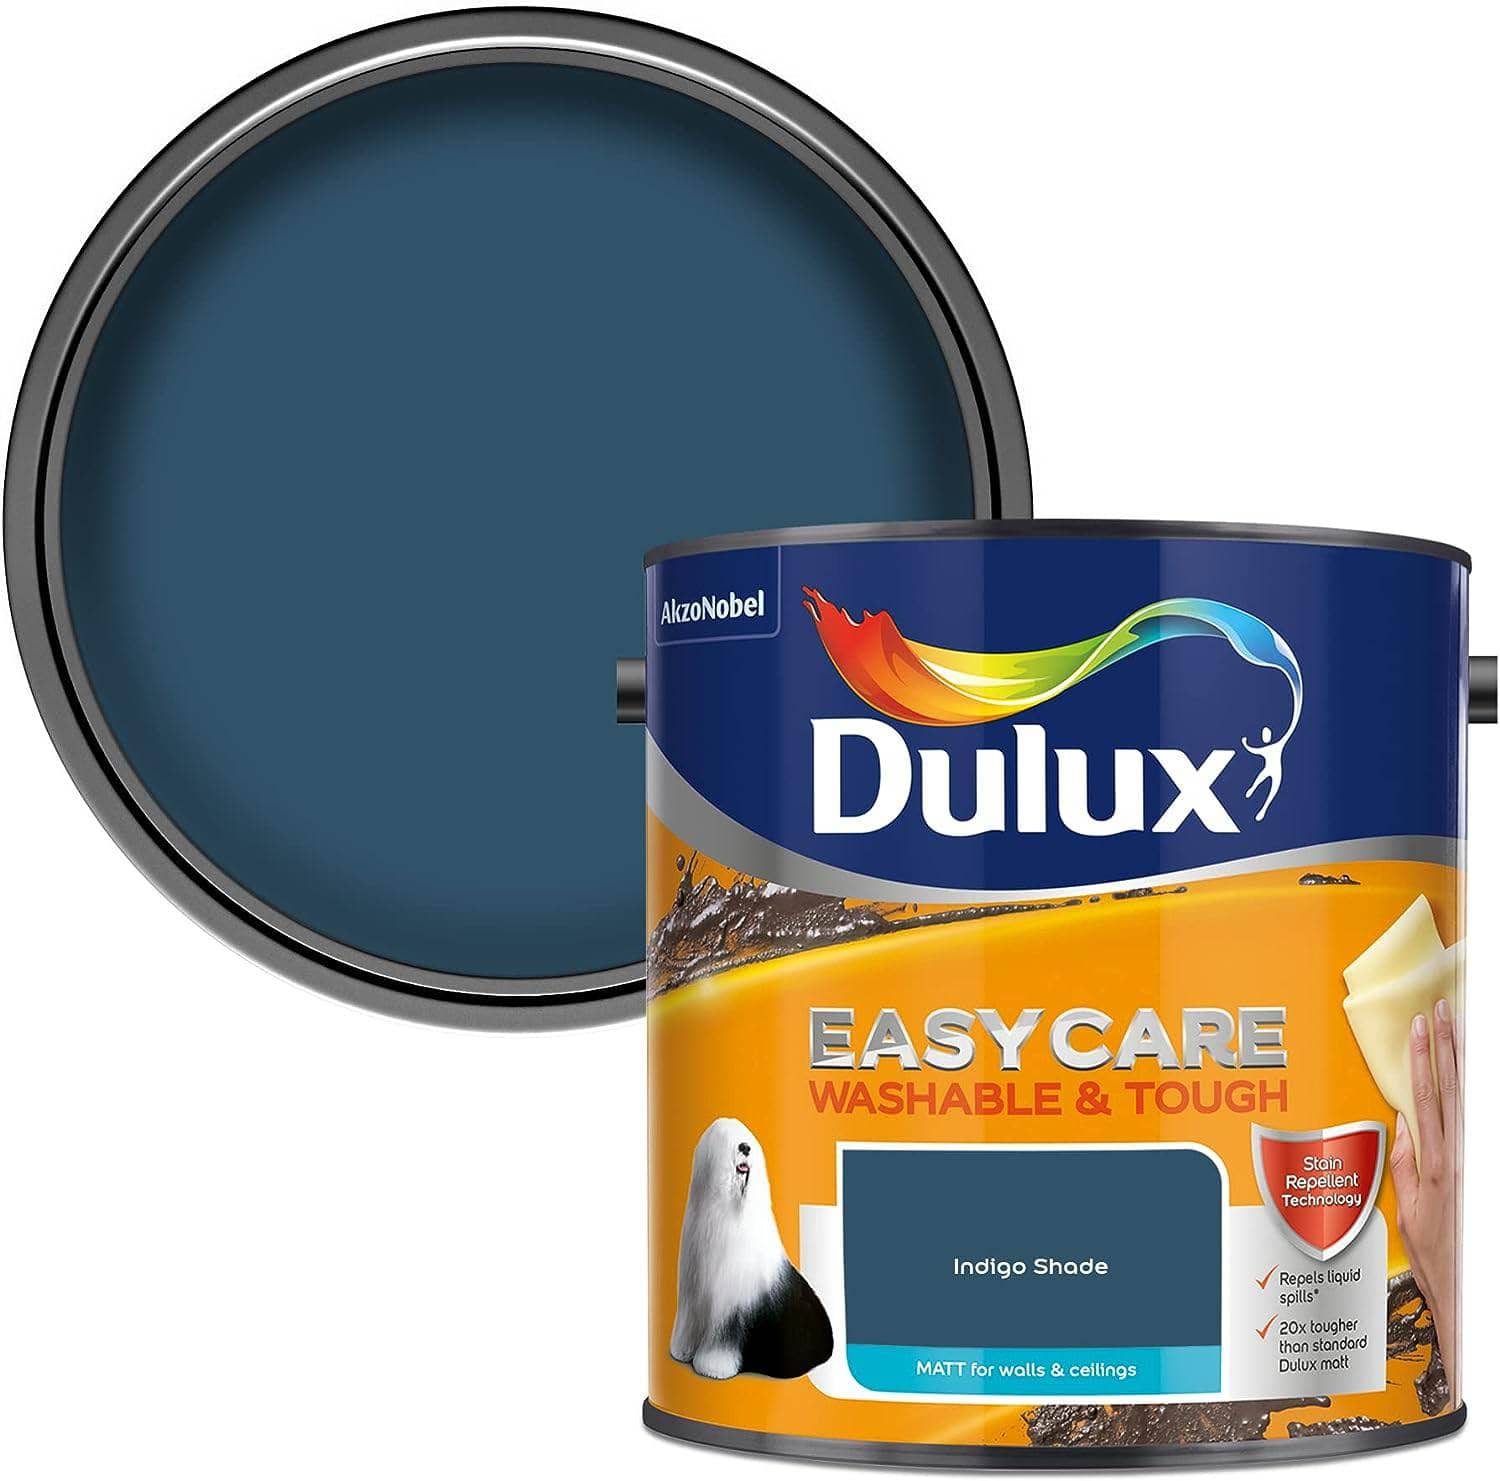 Paint  -  Dulux Easycare Matt Emulsion 2.5L - Indigo Shade  -  60005866